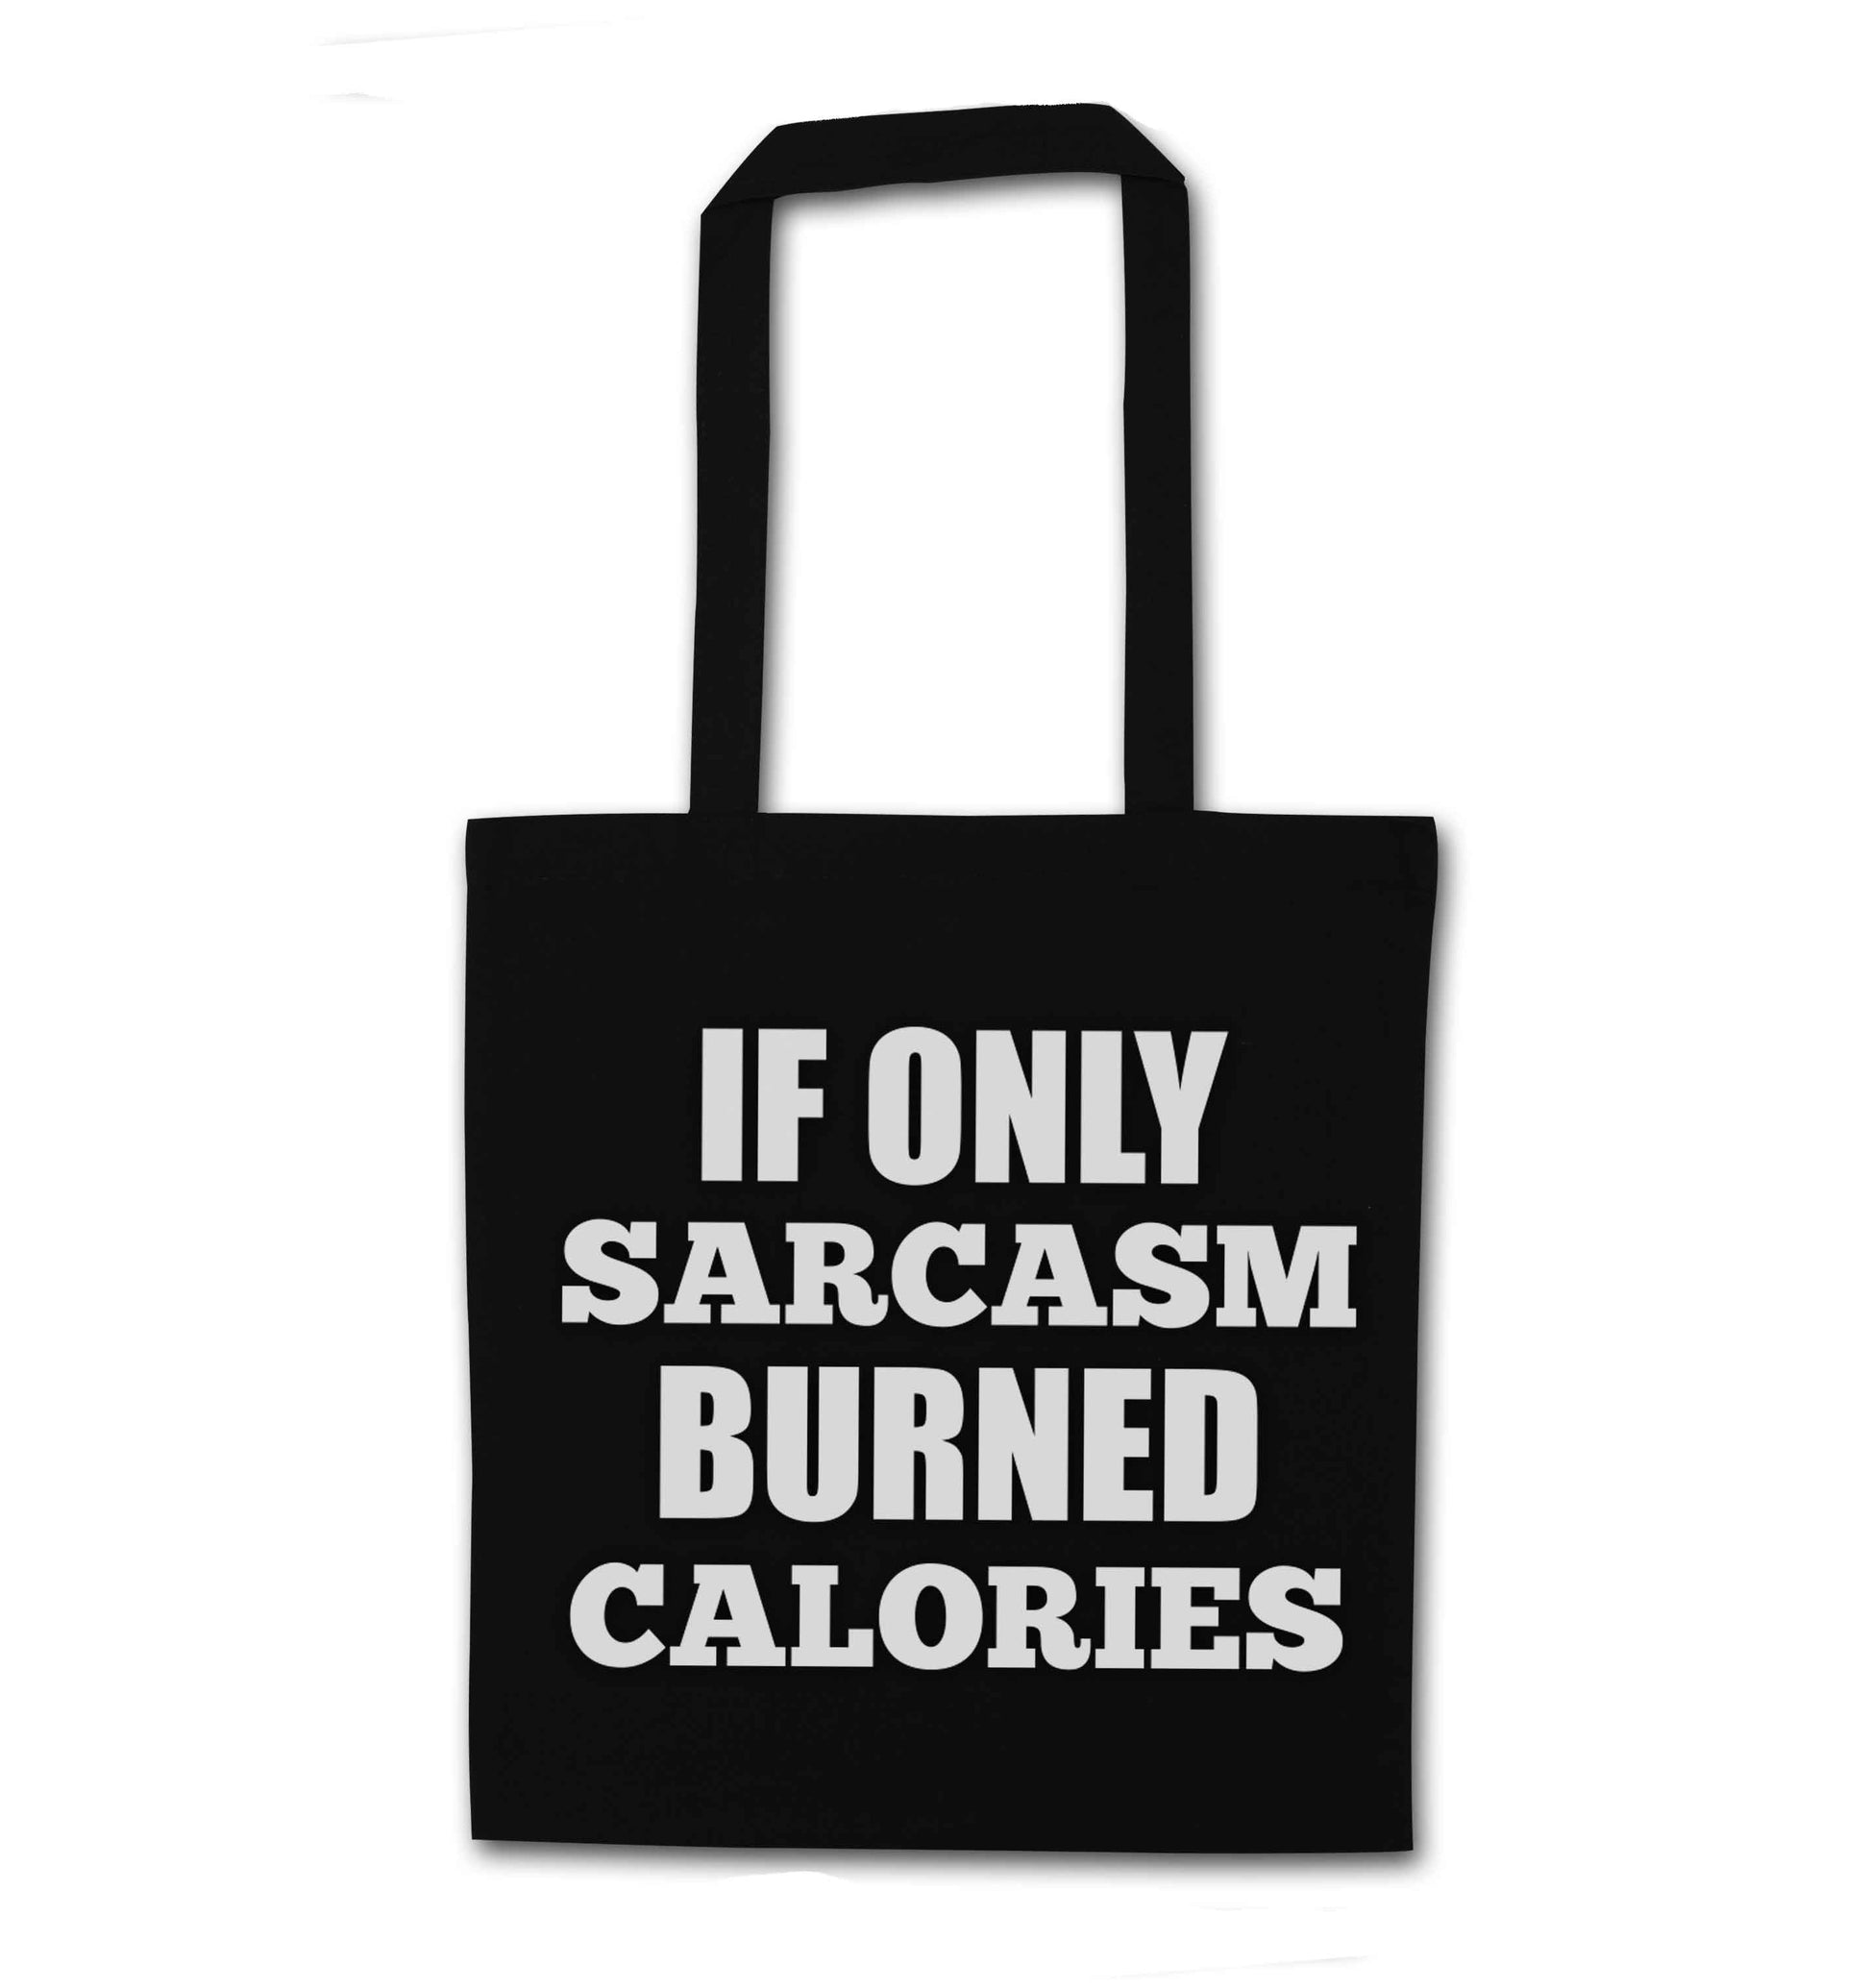 If only sarcasm burned calories black tote bag